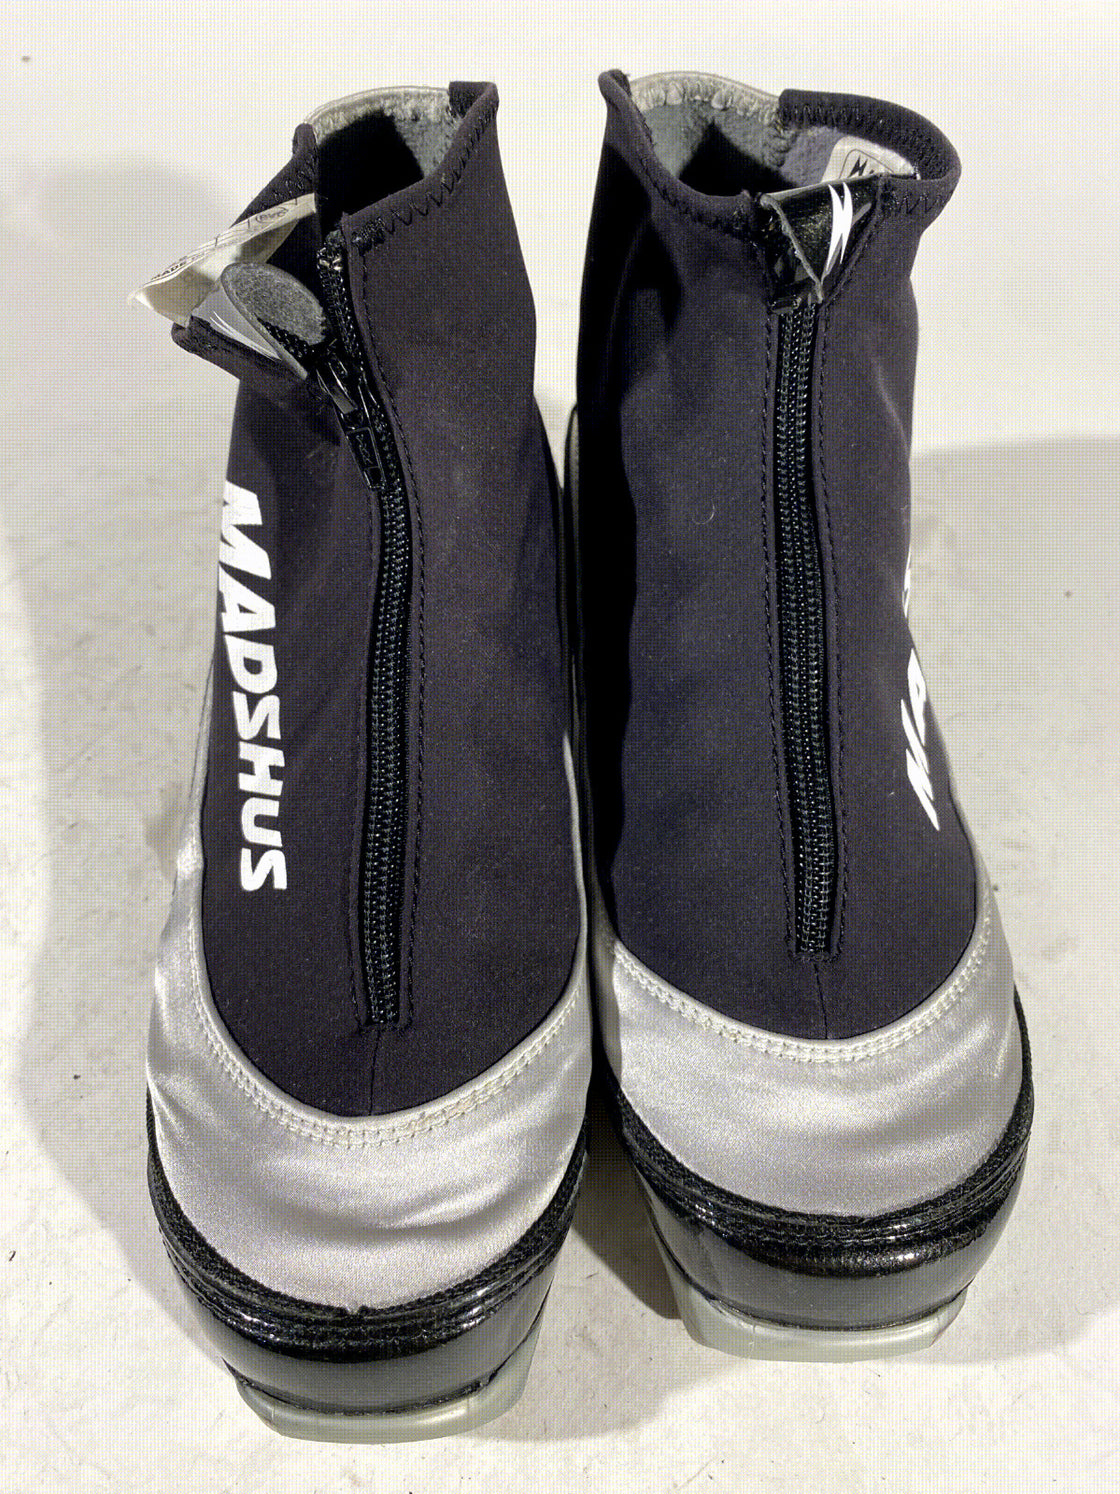 Madshus Hyper C Cross Country Ski Boots Size EU39 US6 for NNN